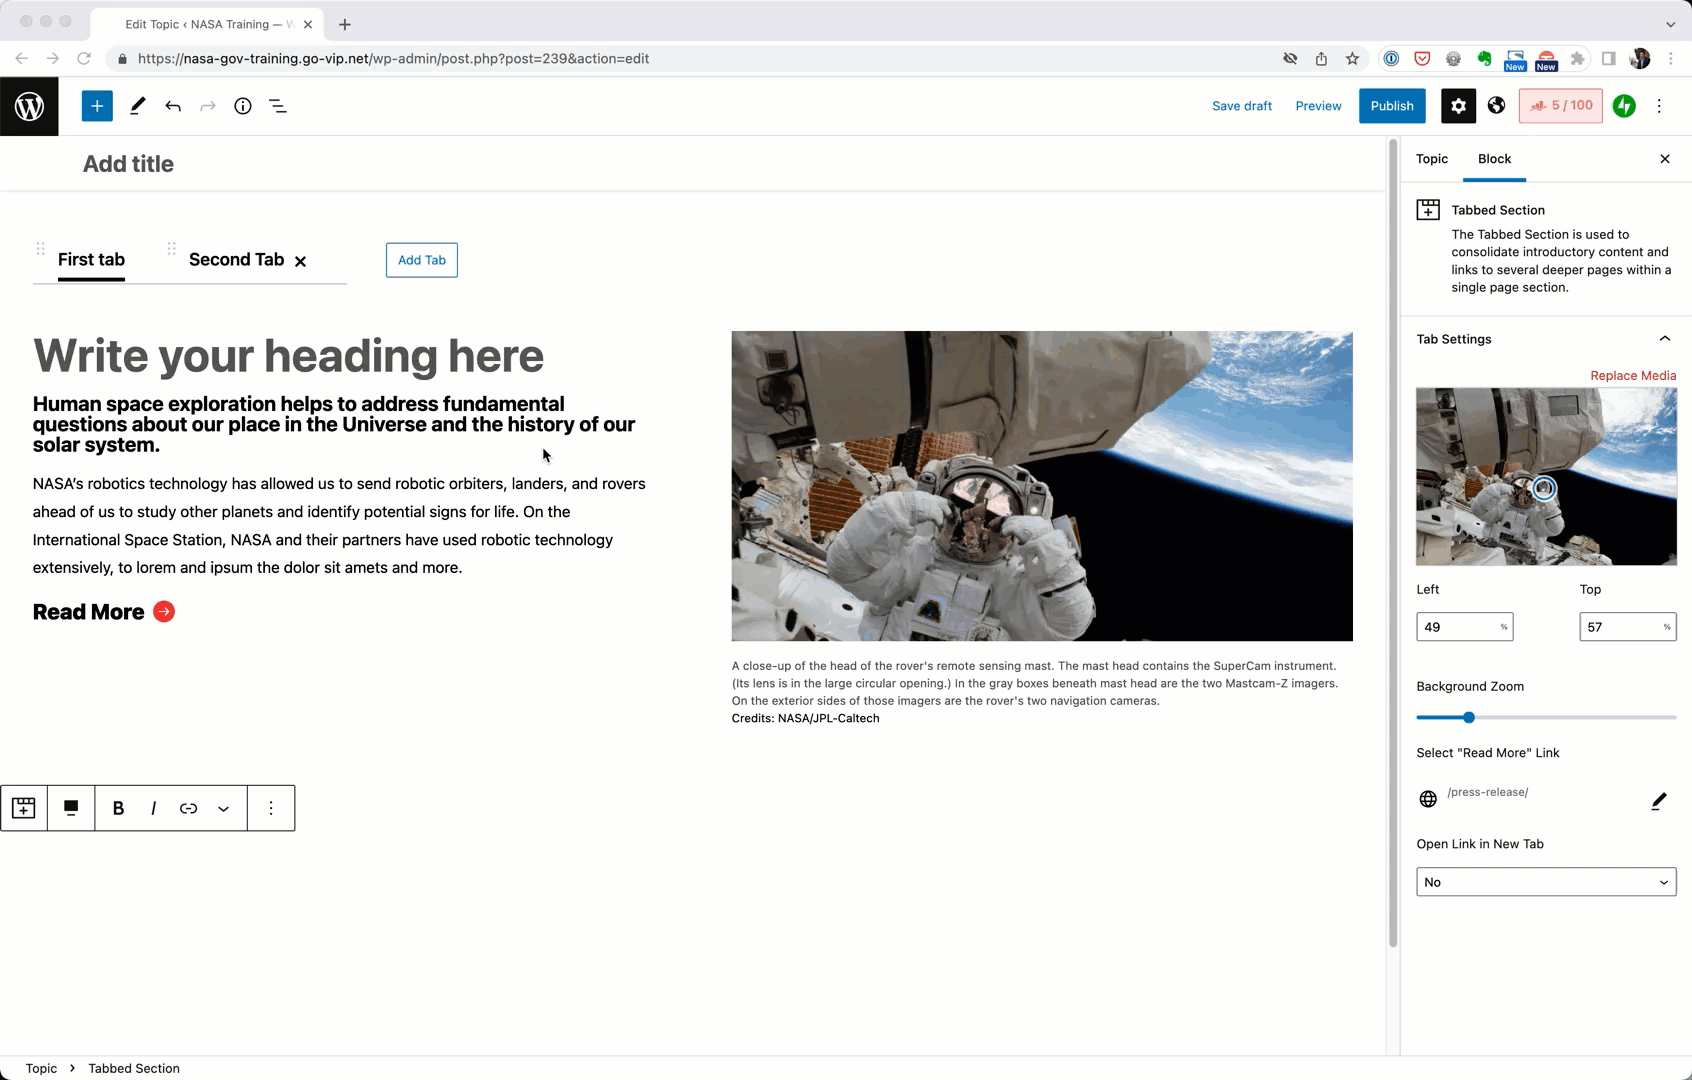 NASA新网站使用wordpress制作，花费超百万美金-悦然wordpress建站